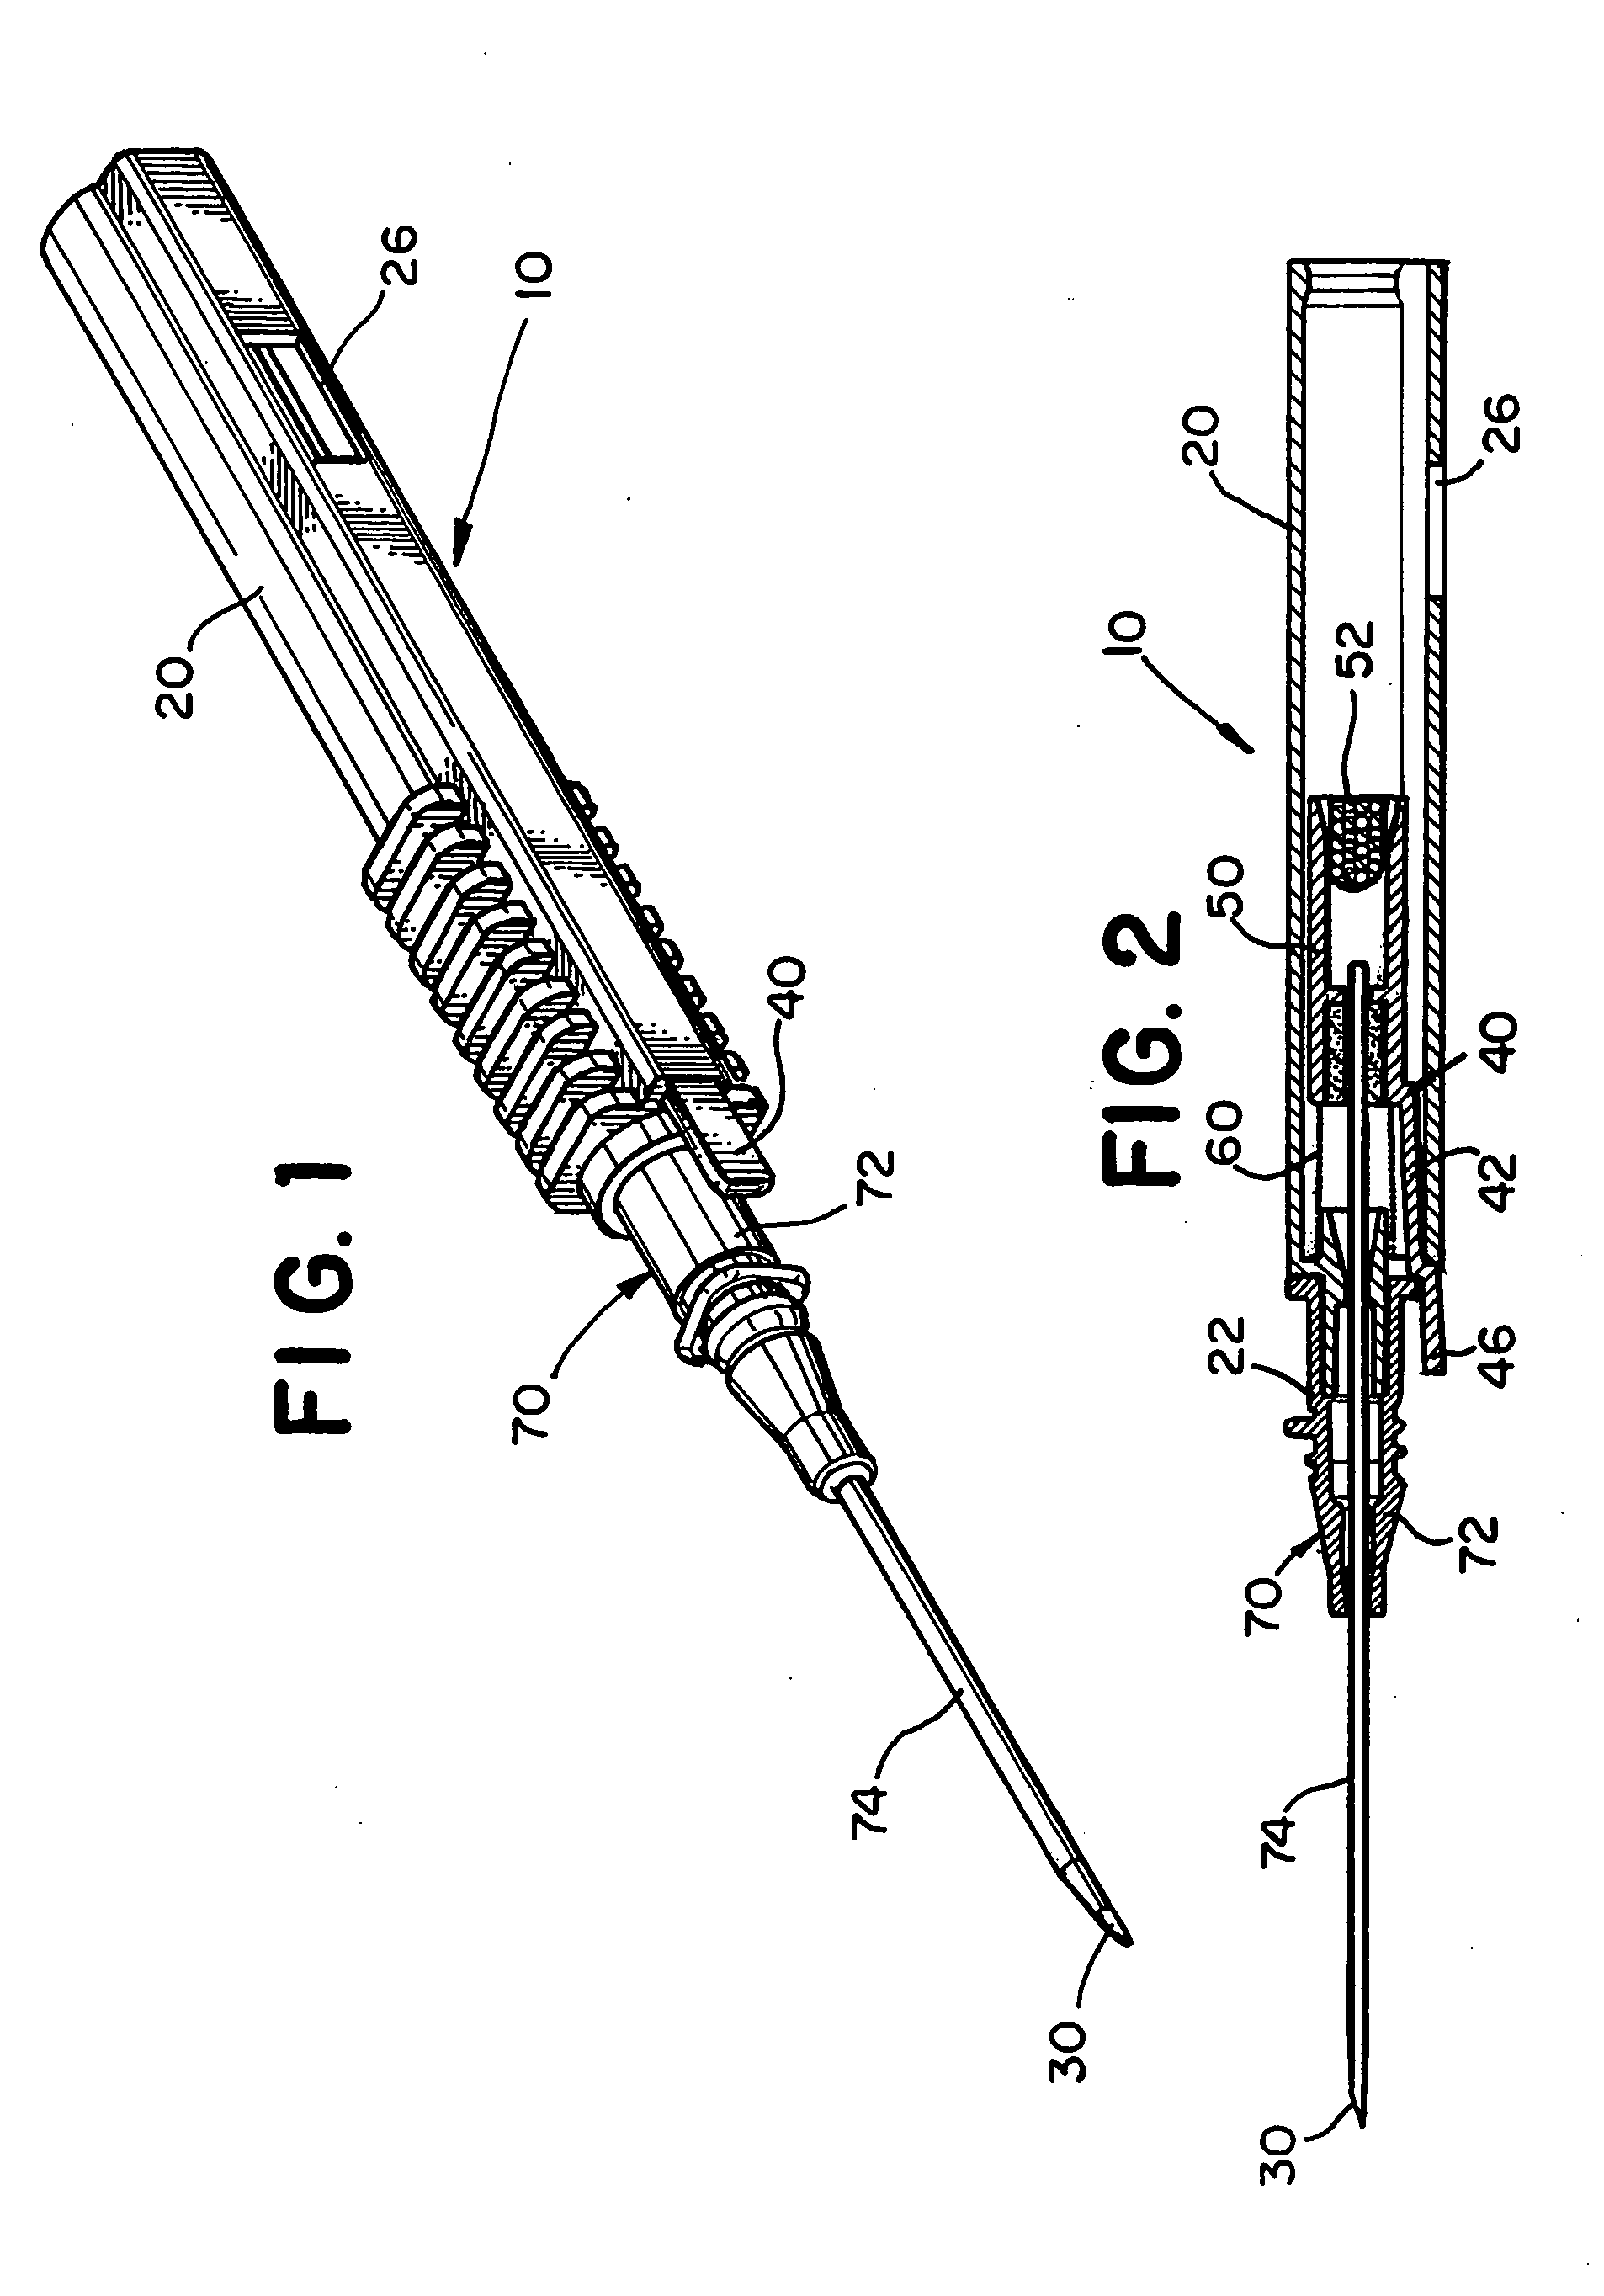 Retractable needle medical device